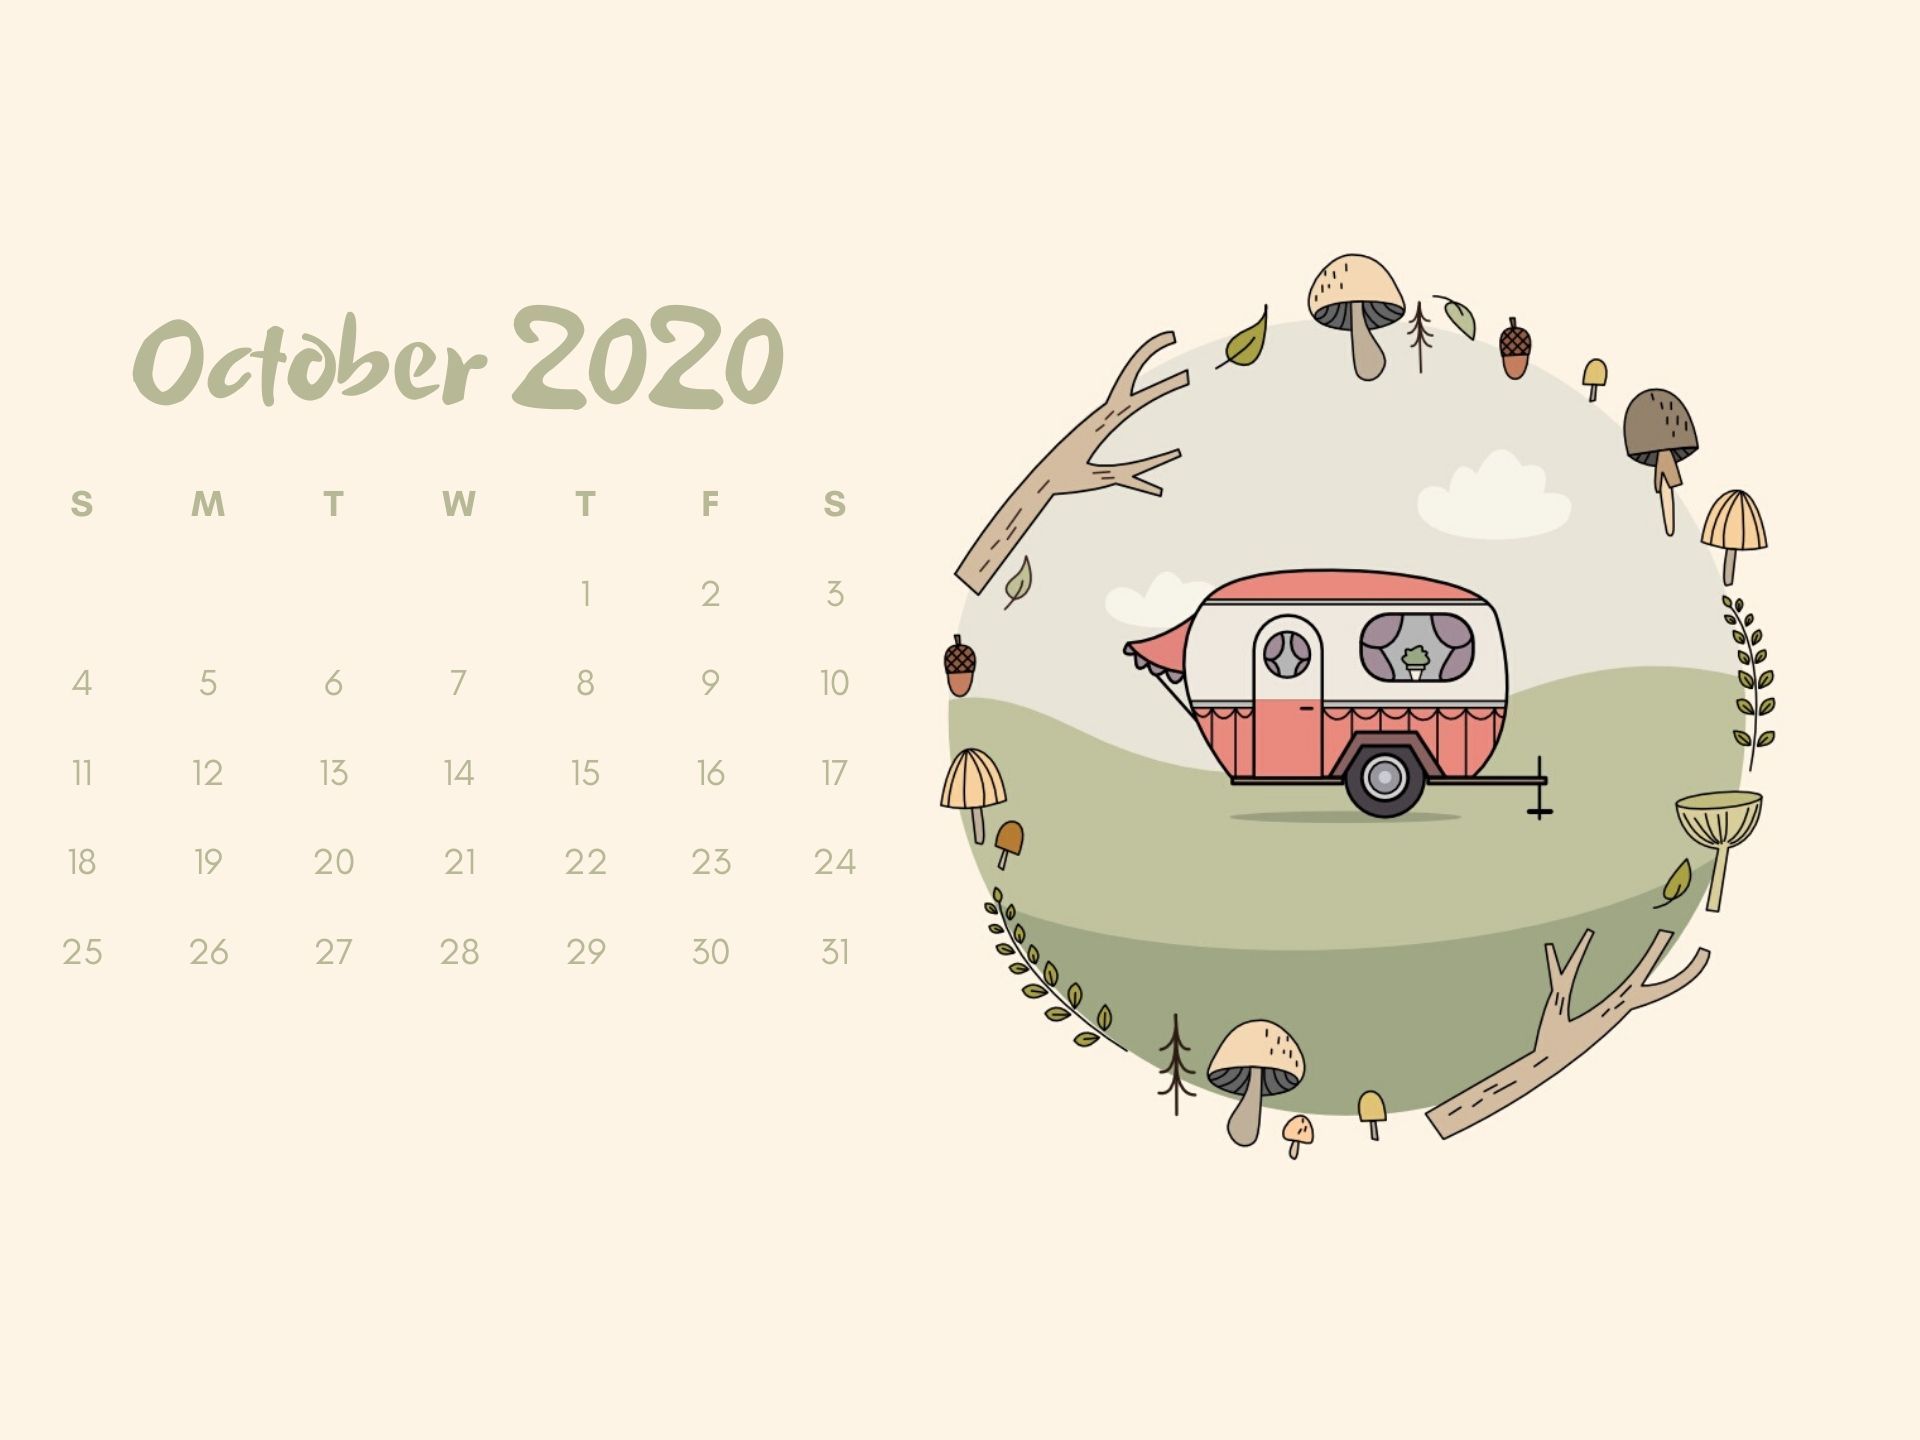 October 2020 Calendar HD Wallpaper Free Download